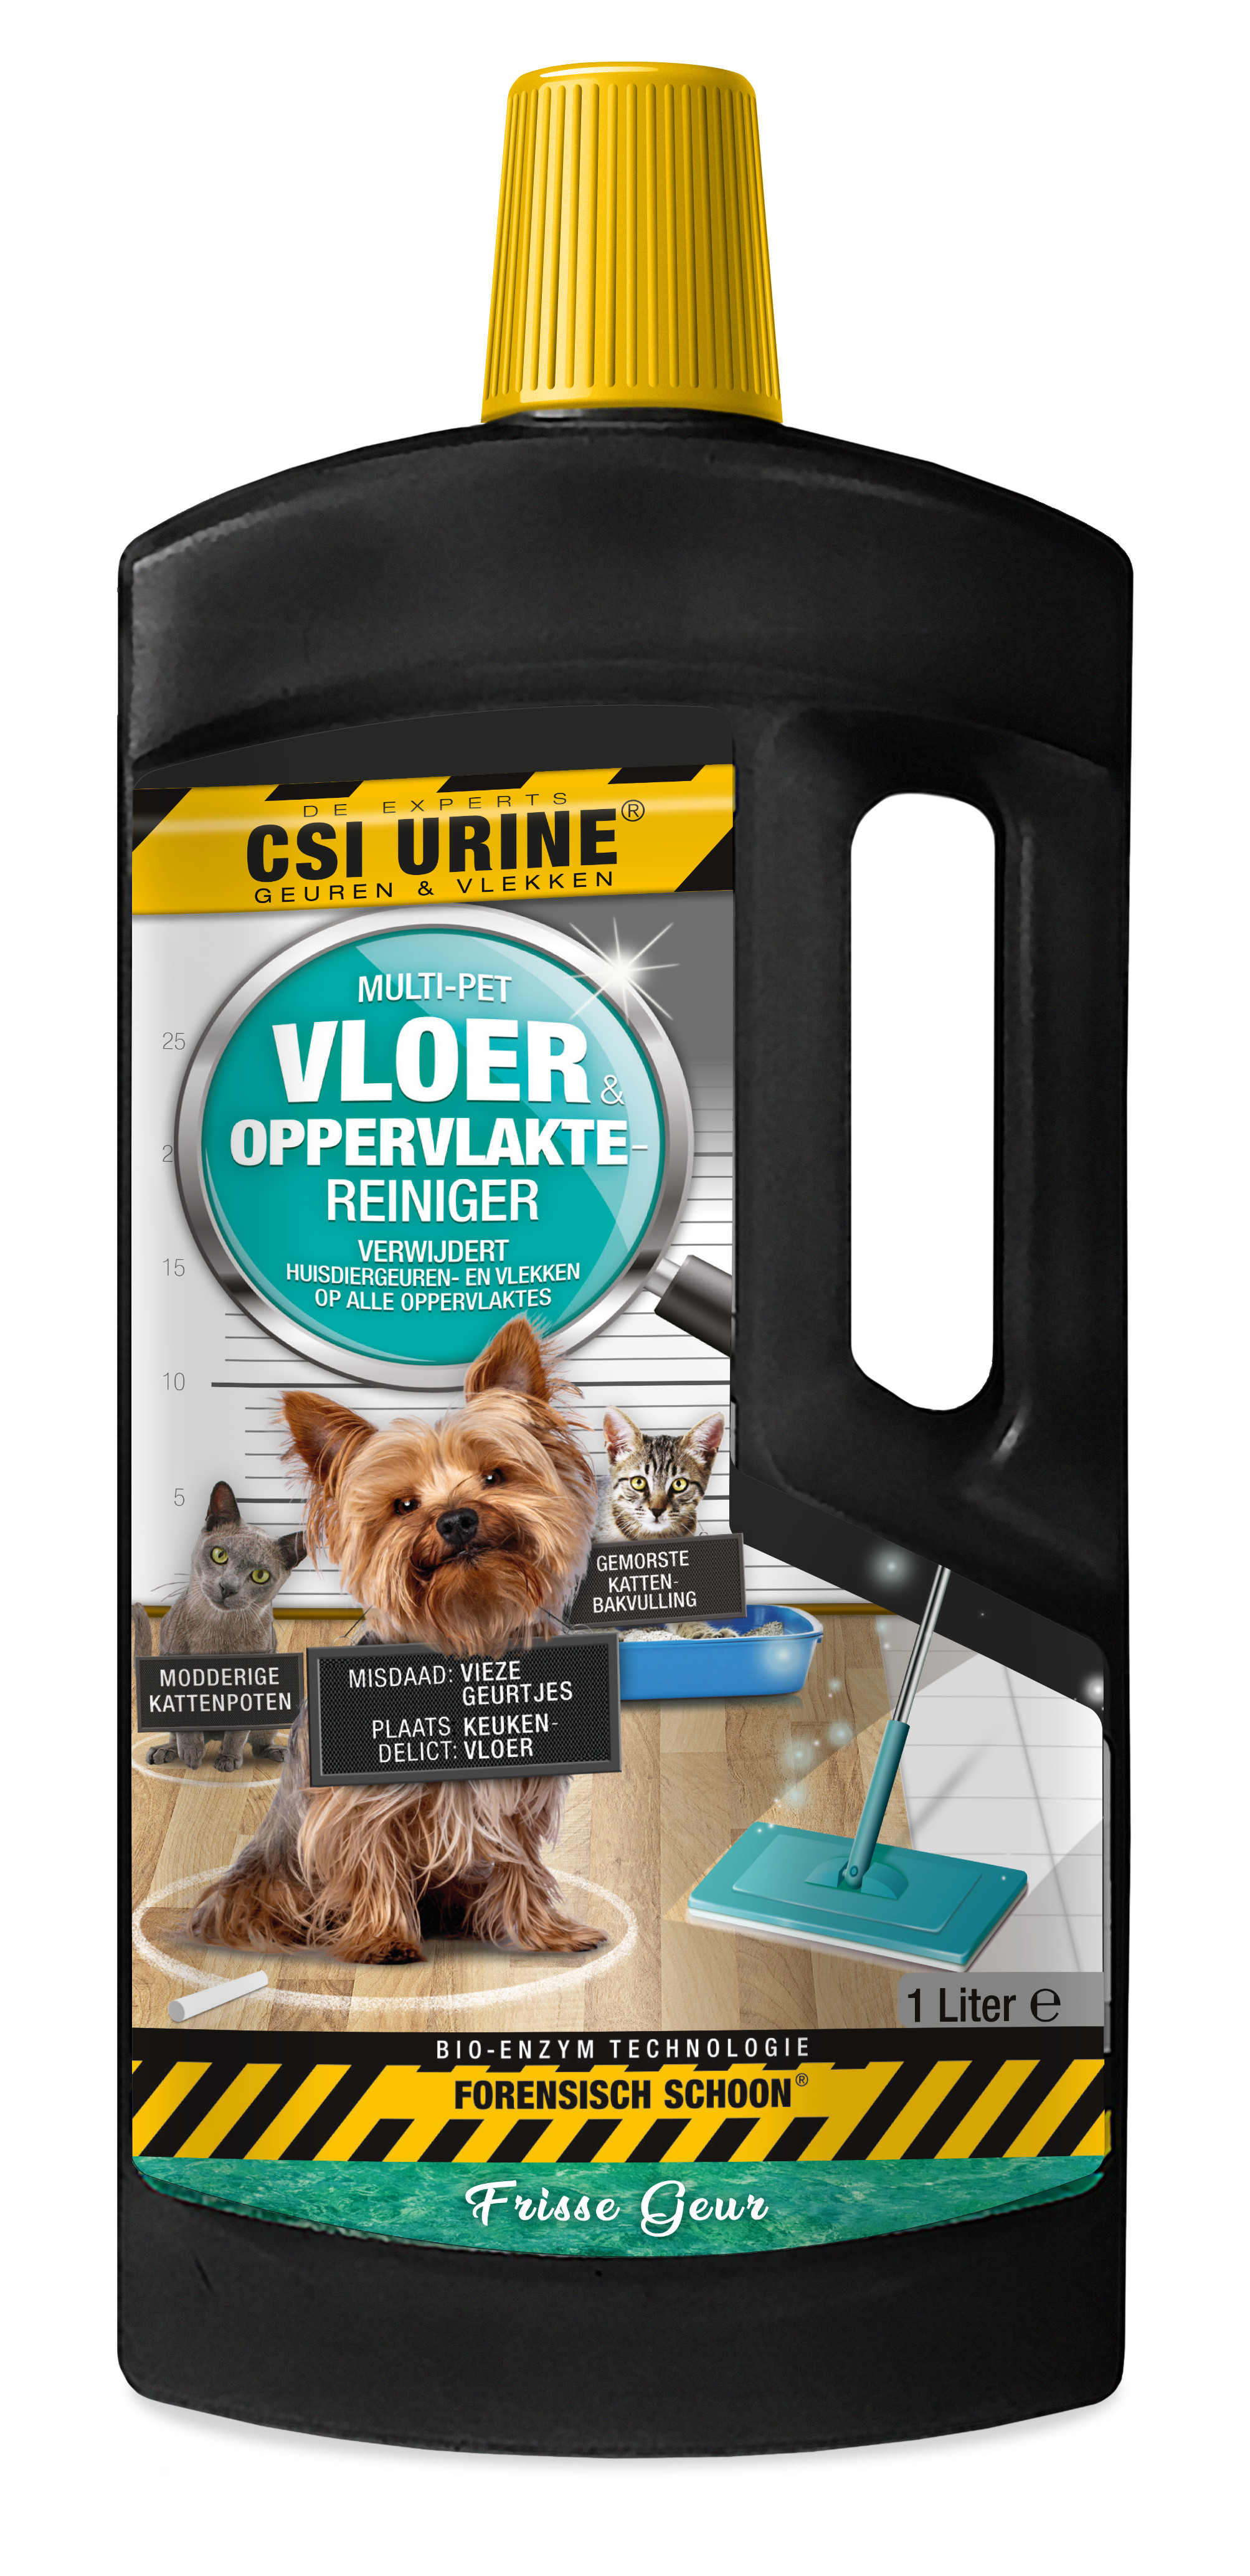 CSI Urine detergente per pavimenti e superfici